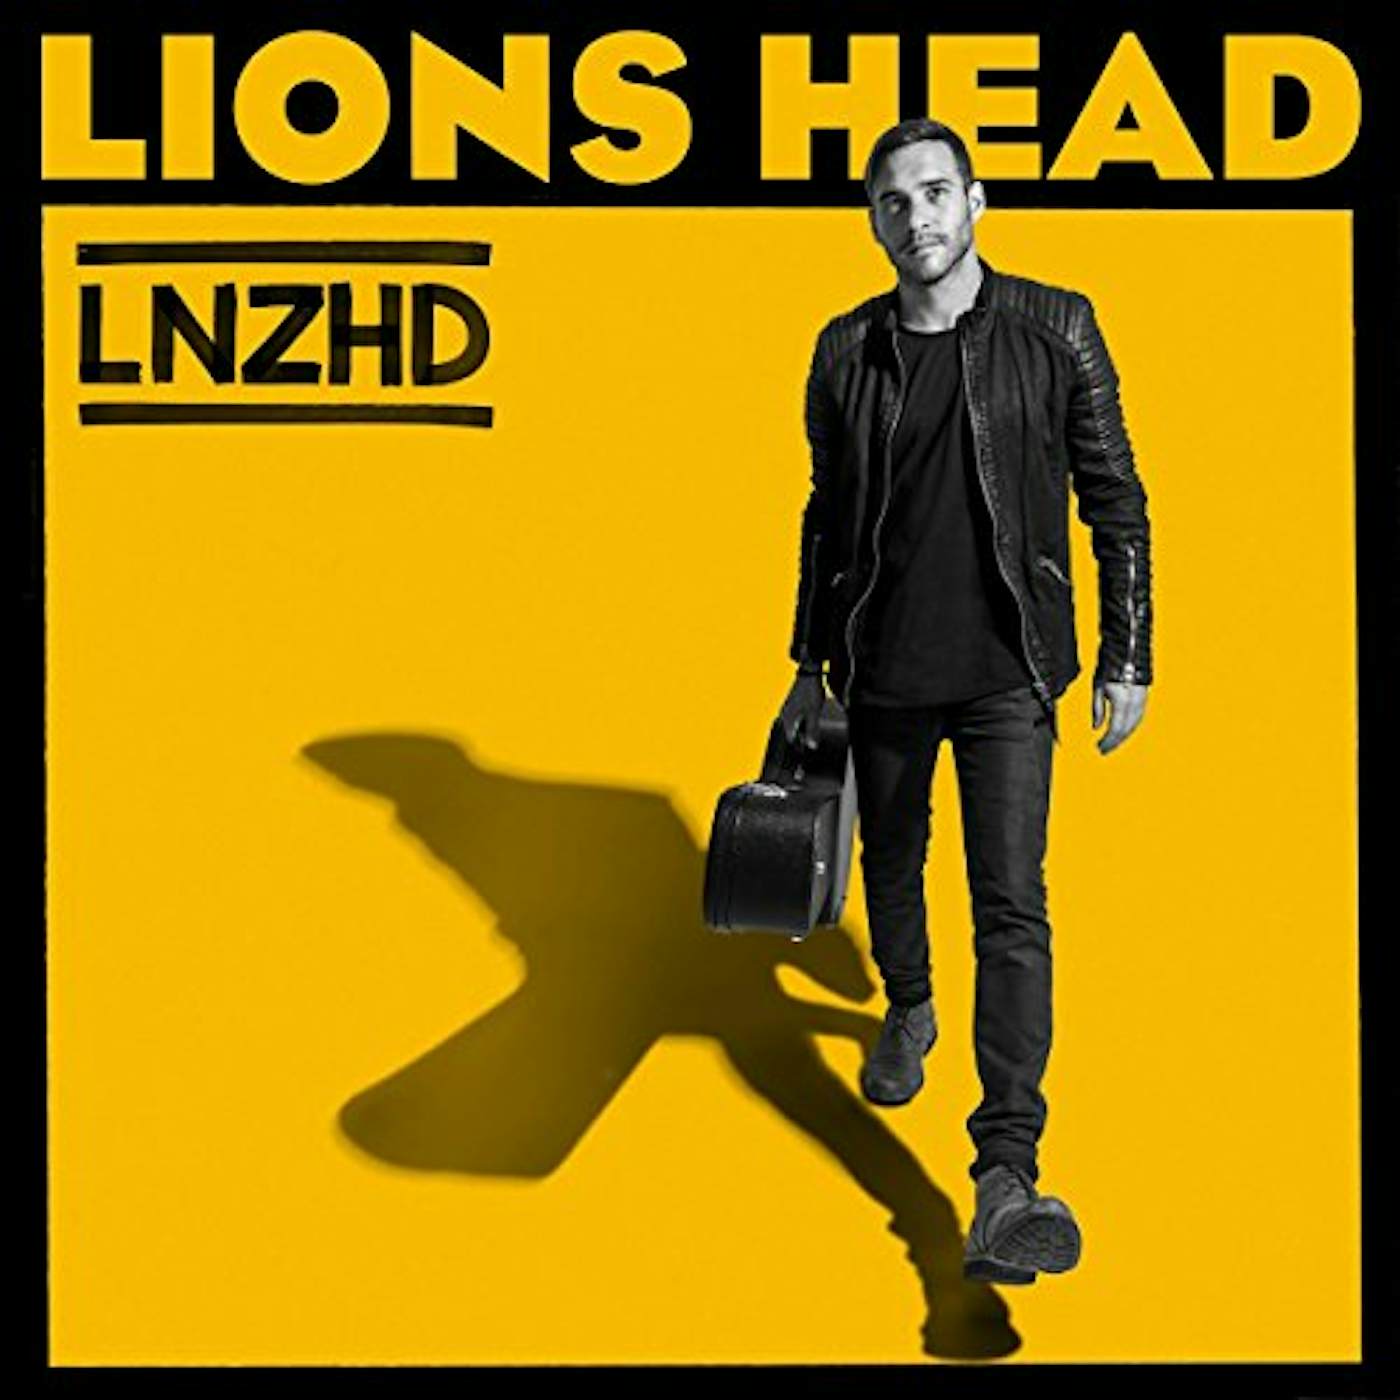 Lions Head LNZHD CD